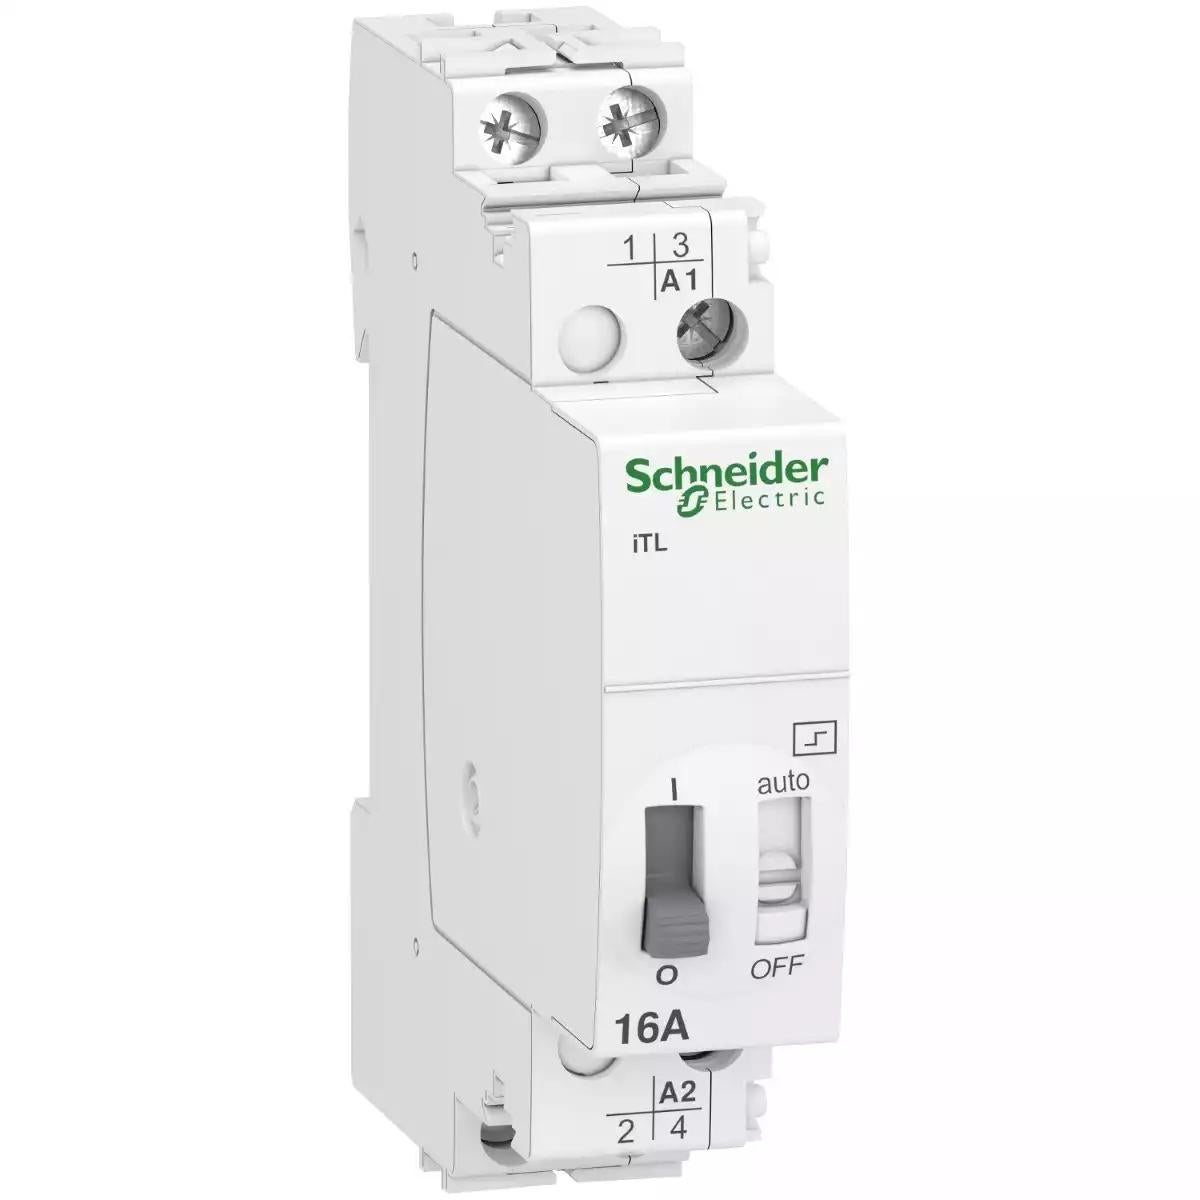 Schneider Electric Acti 9 iTL impulse relay - 2P - 2 NO - 16A - coil 110 VDC - 230...240 VAC 50/60Hz